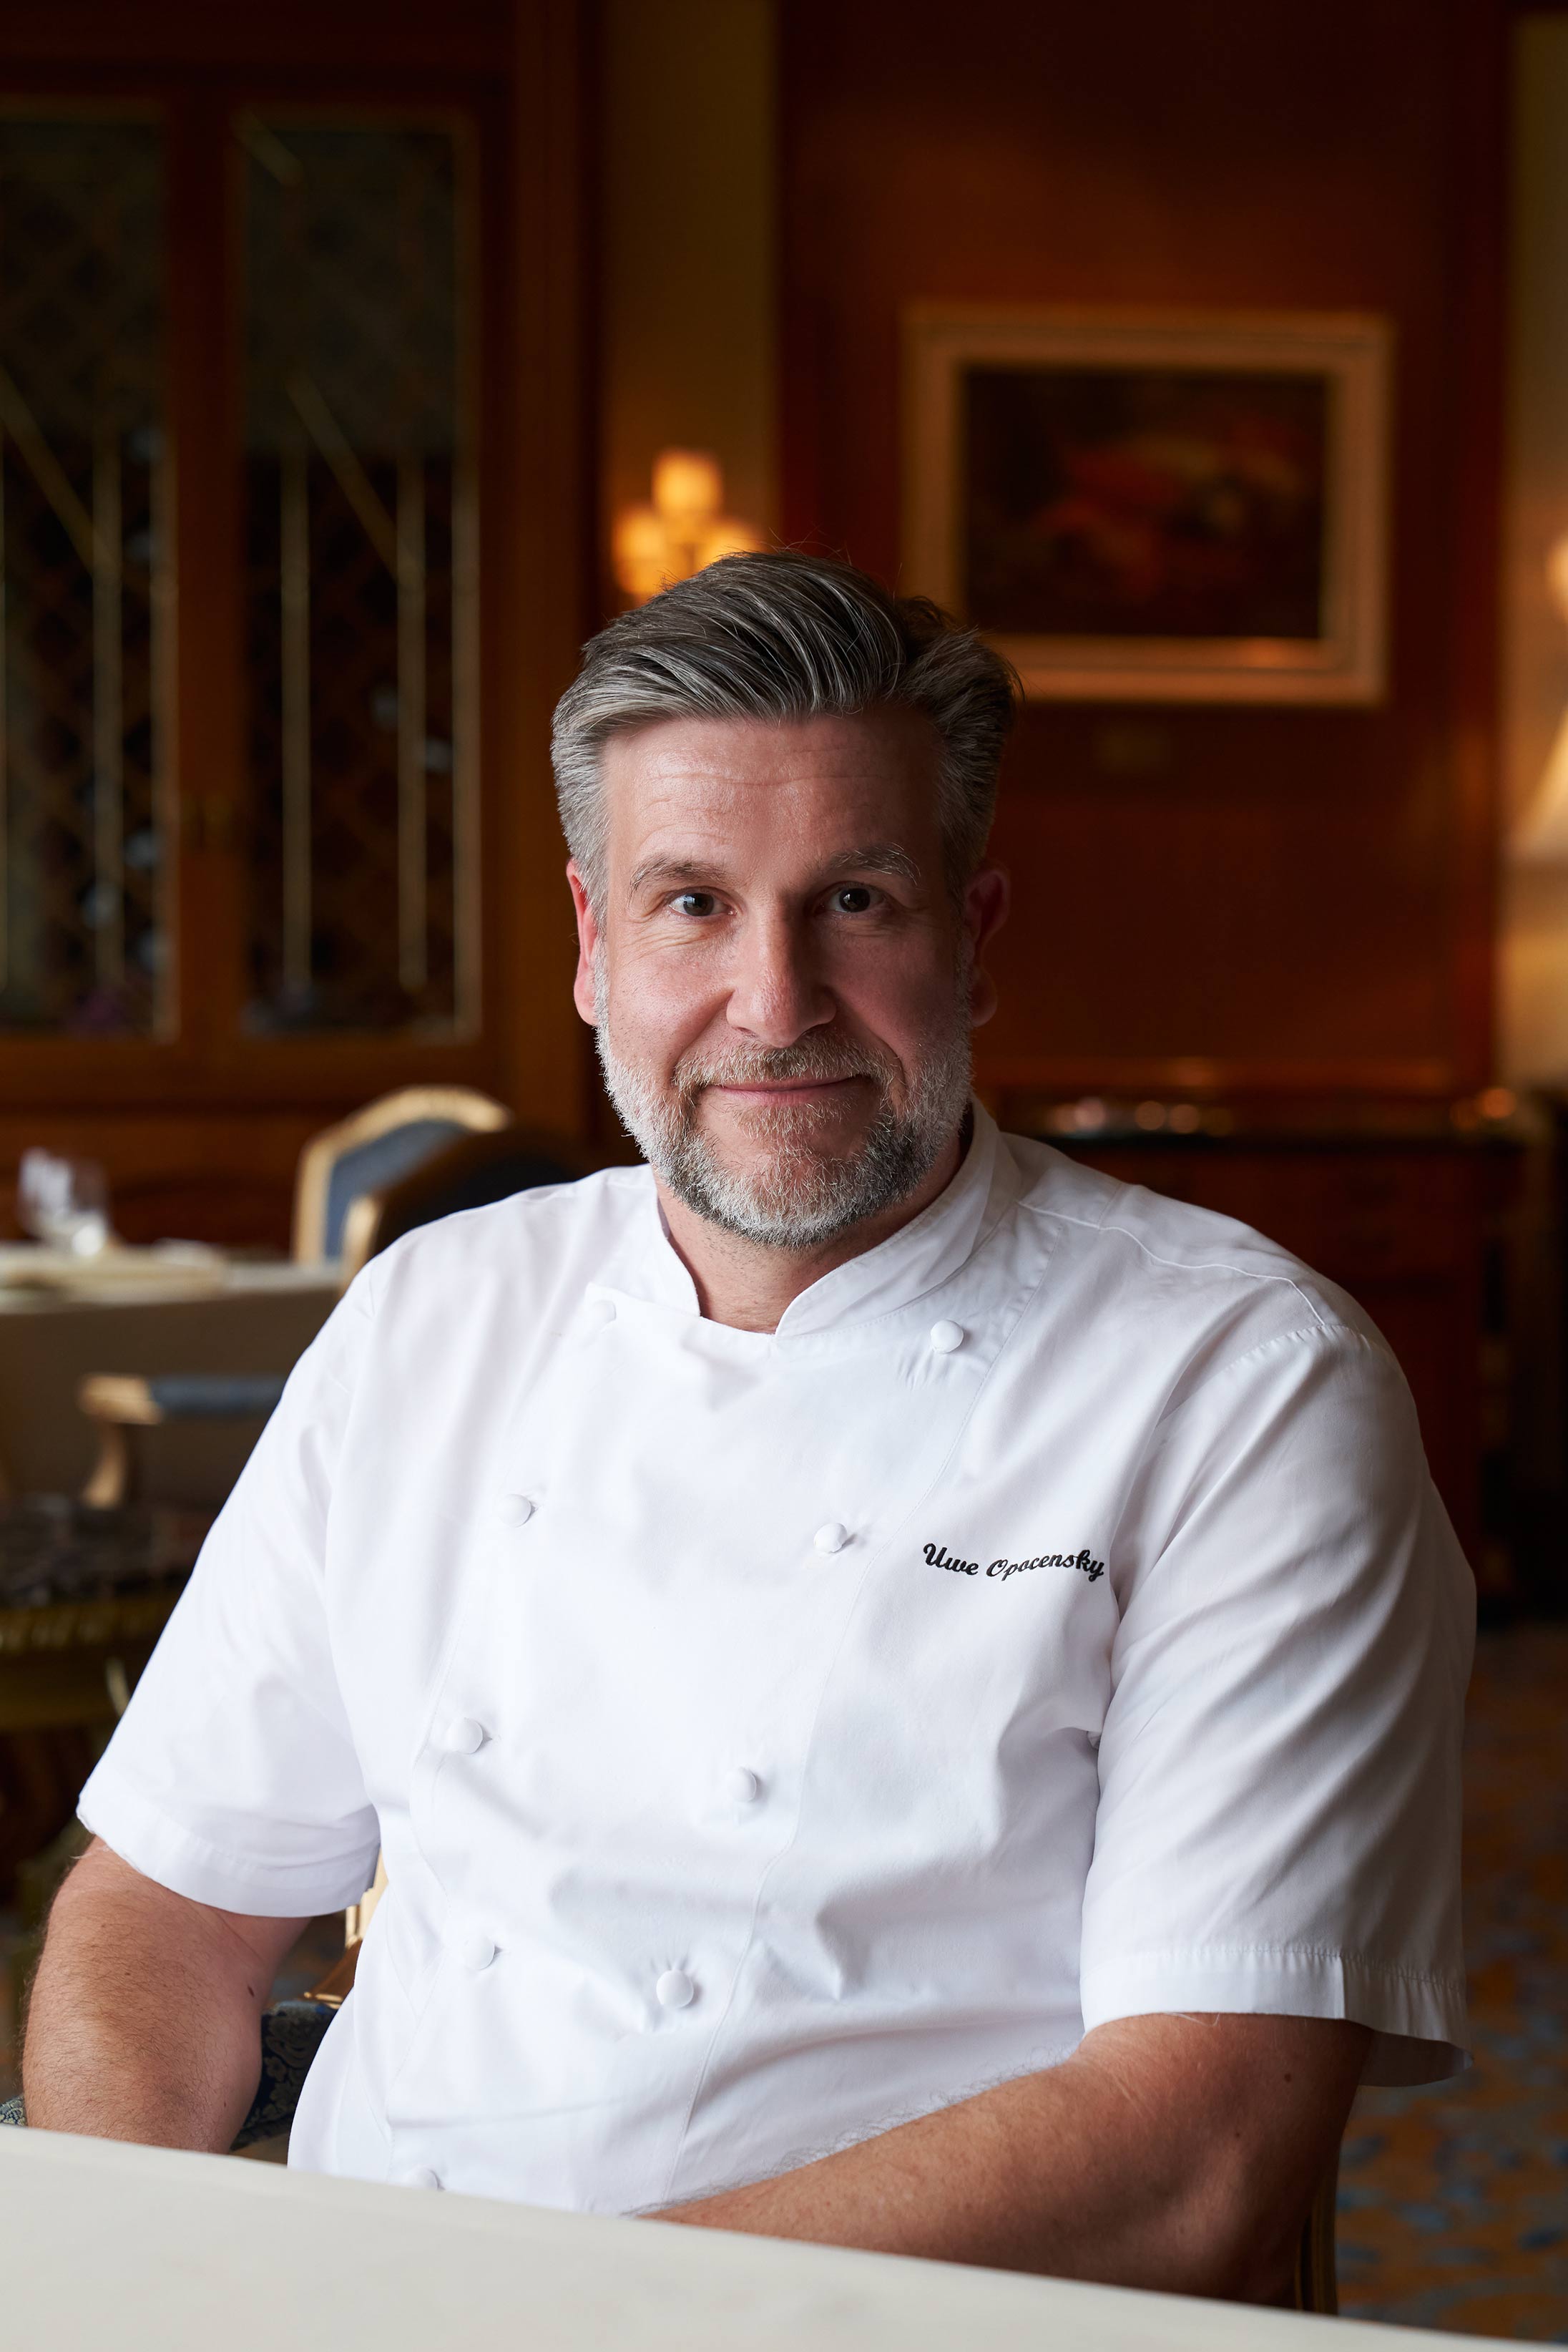 Michelin-starred Chef Uwe Opocensky, Executive Chef of Island Shangri-La Hong Kong